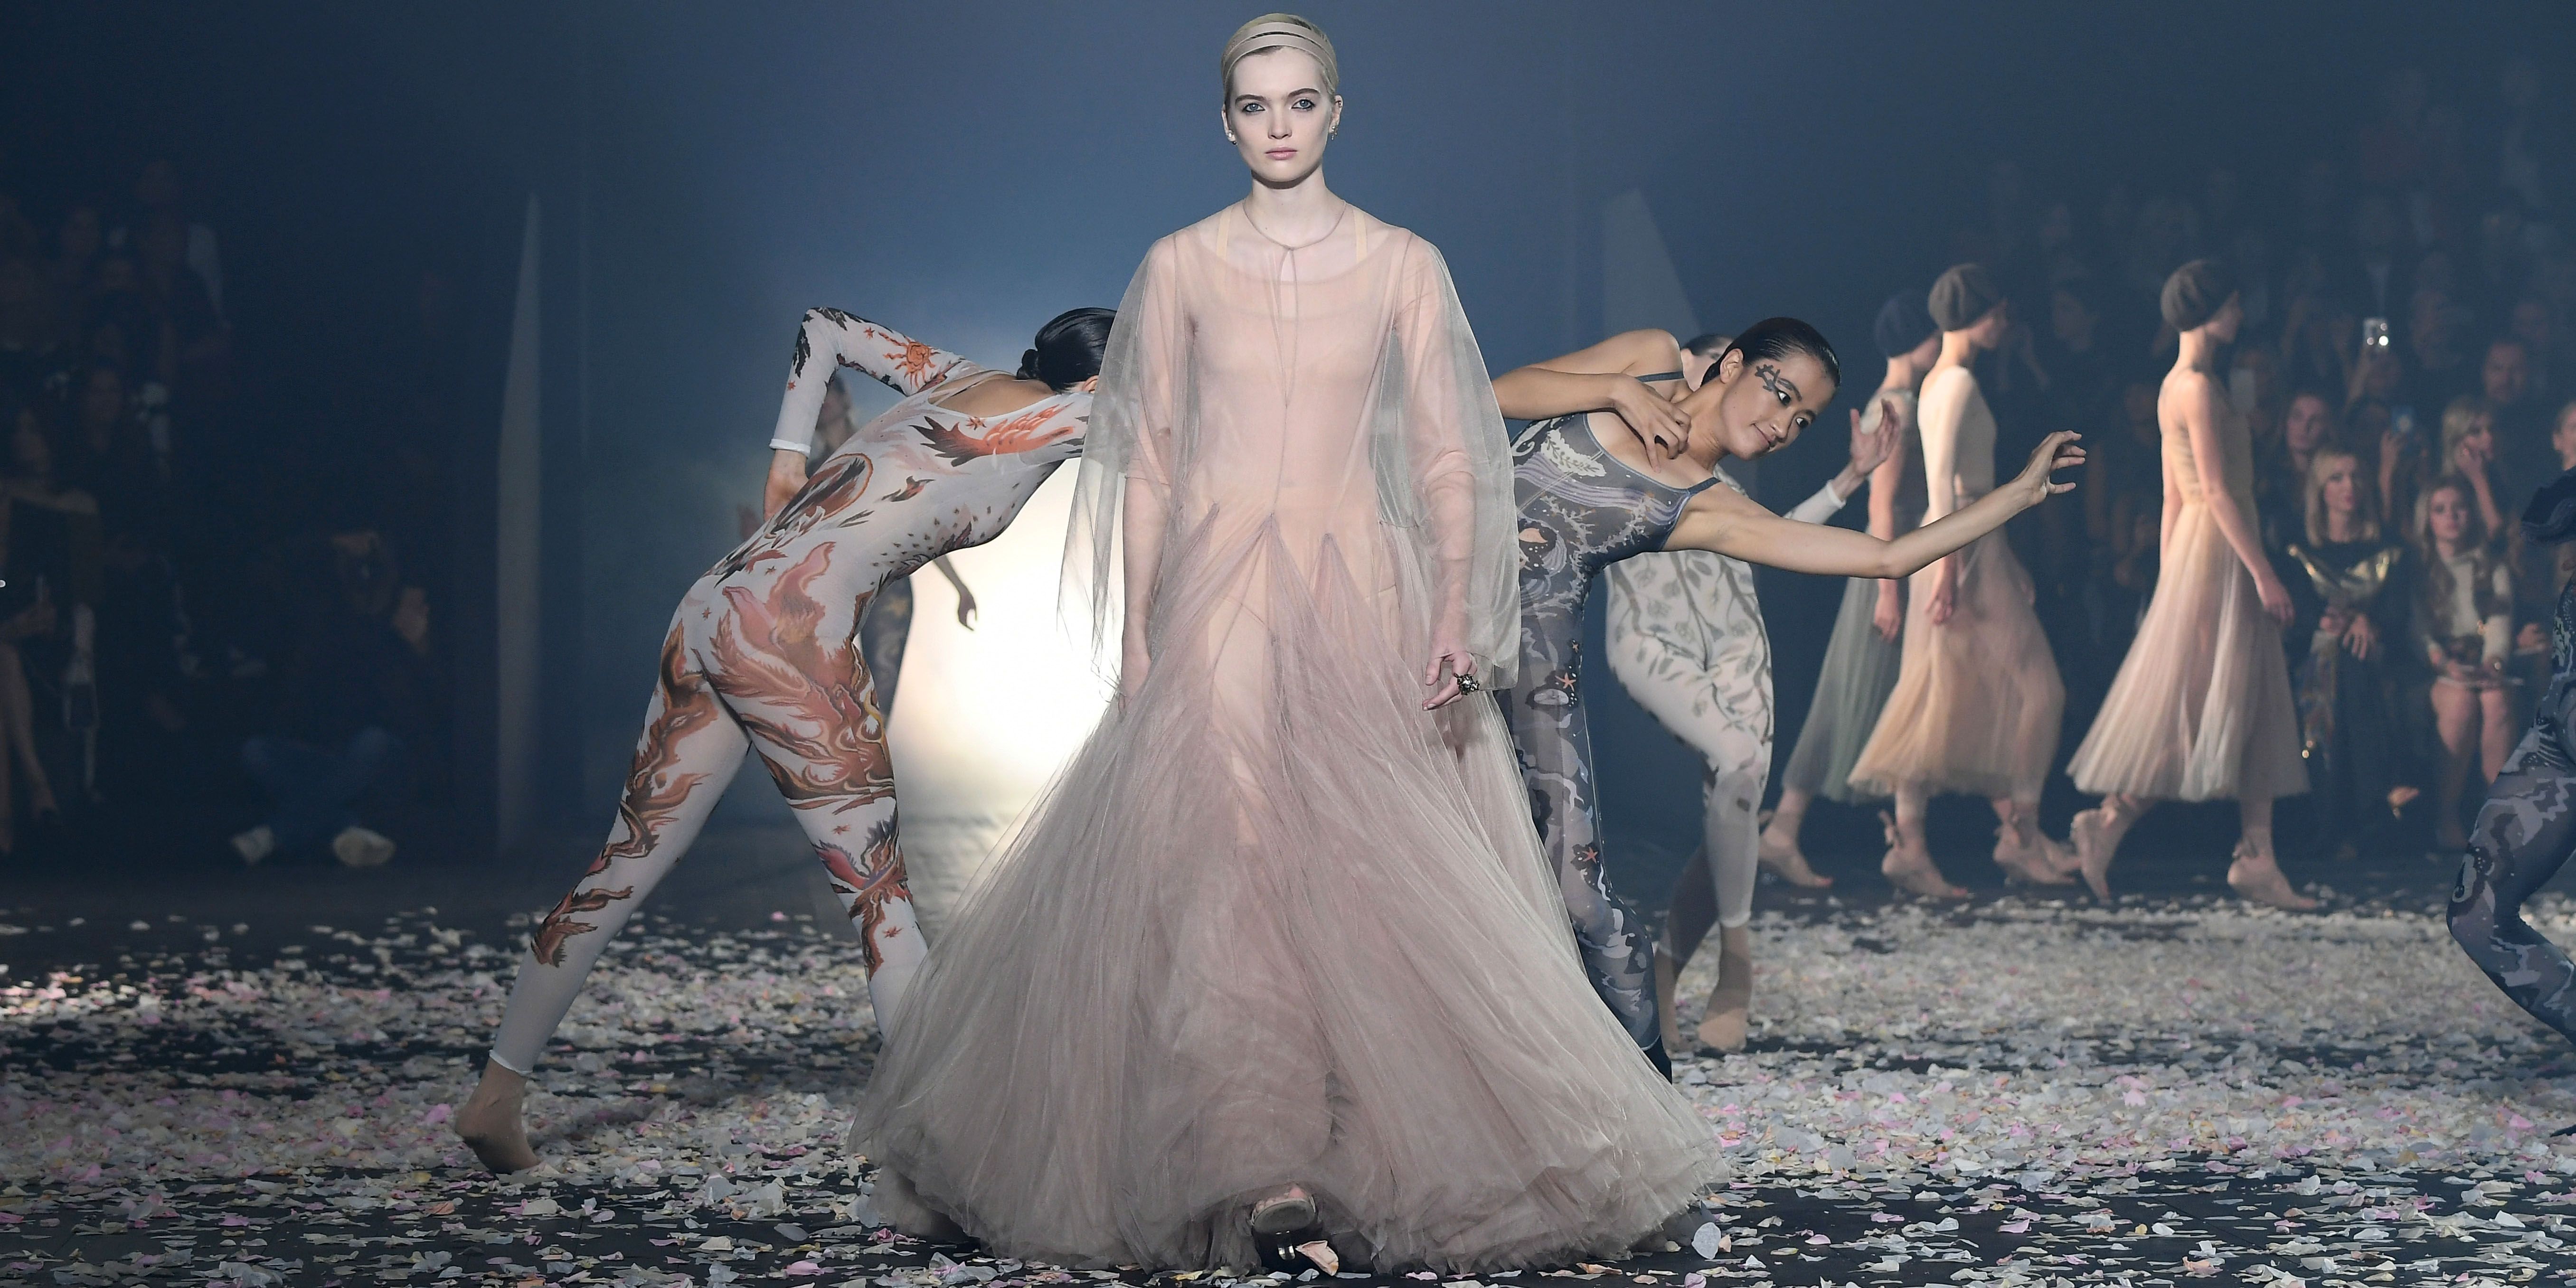 Celeb Pink Dior Dress Red Carpet Trend Lady Gaga More